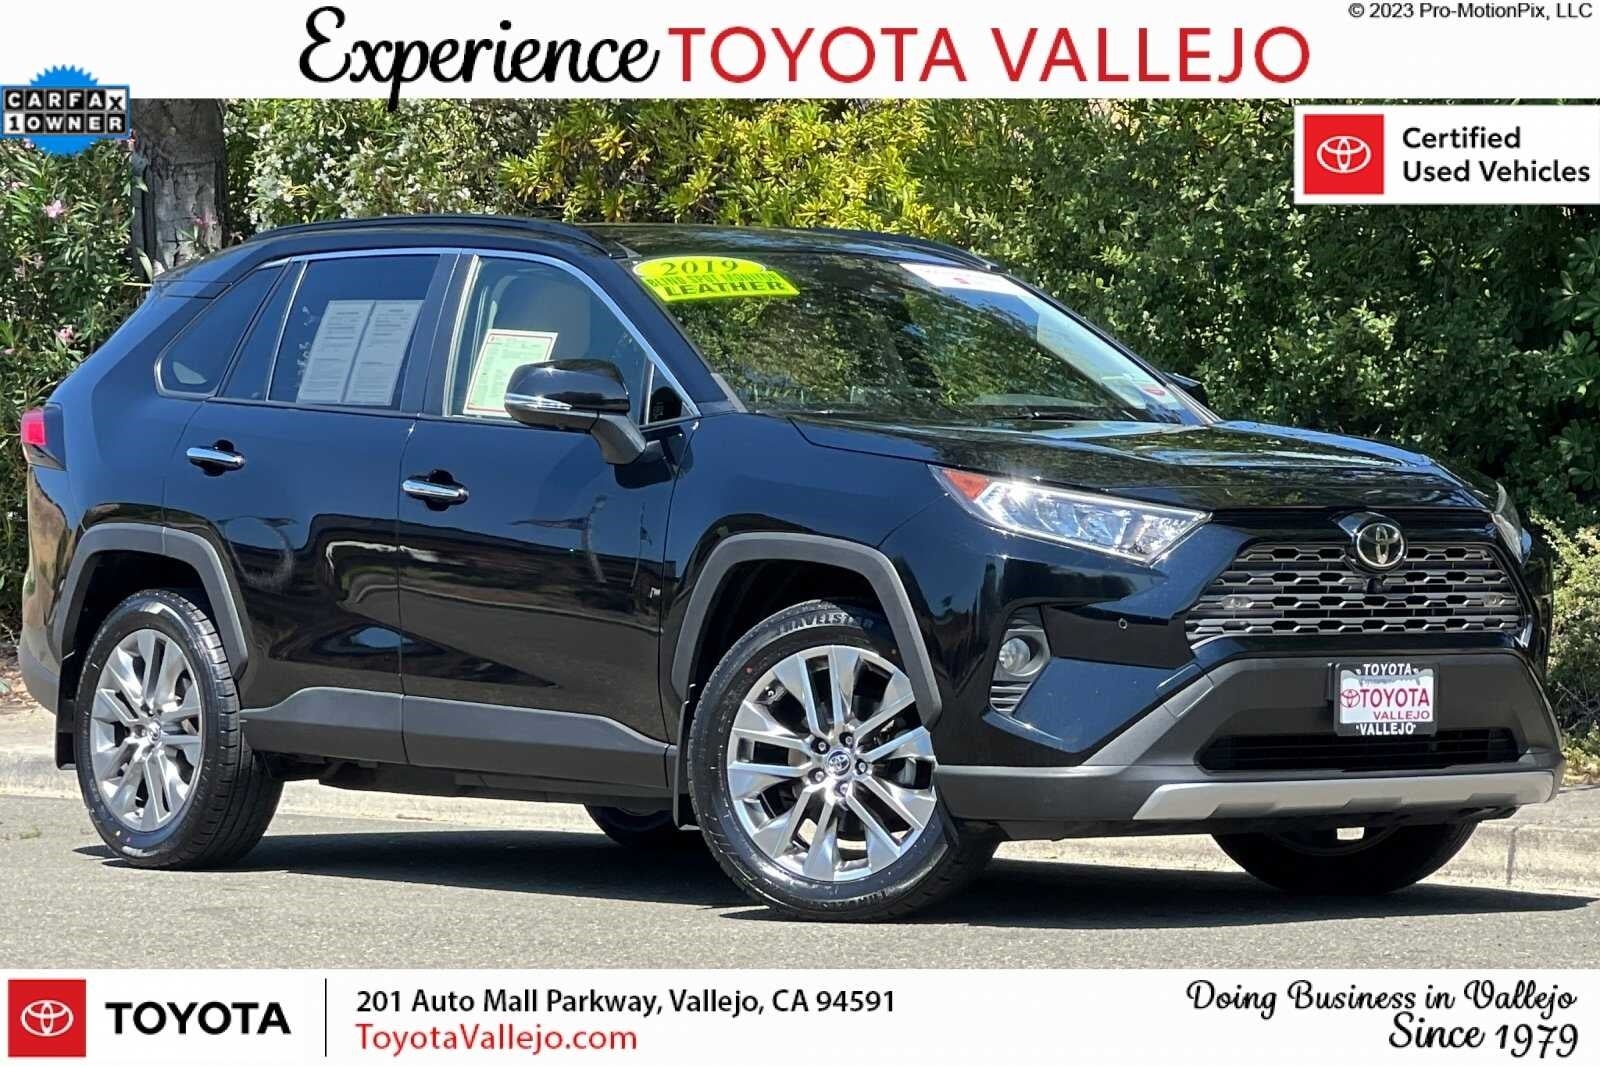 Used 2019 Toyota RAV4 Limited with VIN JTMY1RFV2KD516167 for sale in Vallejo, CA